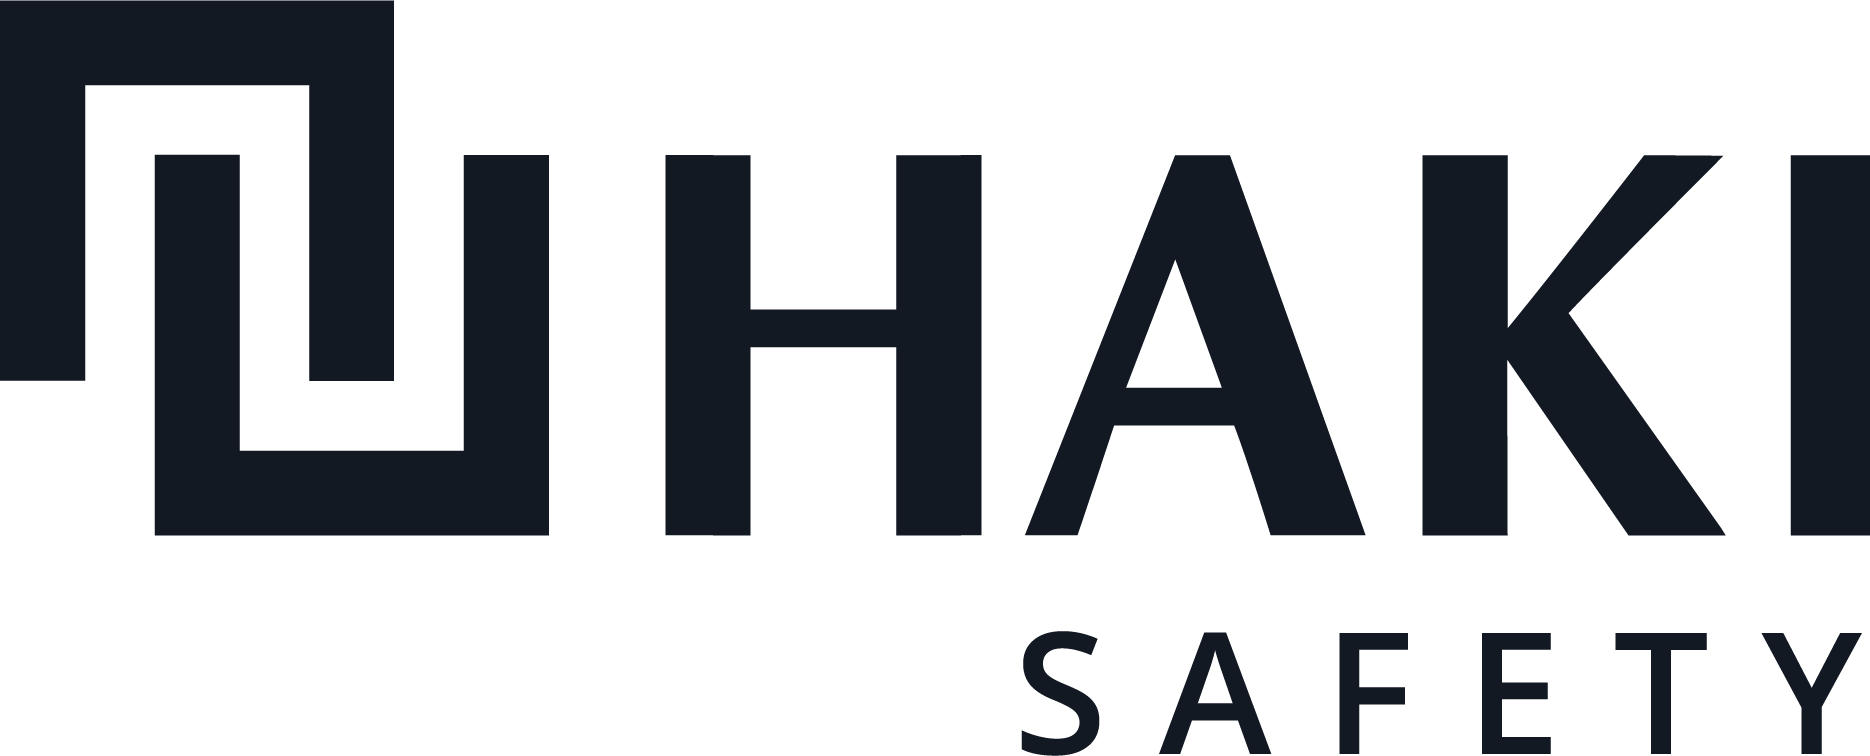 Haki Safety logo